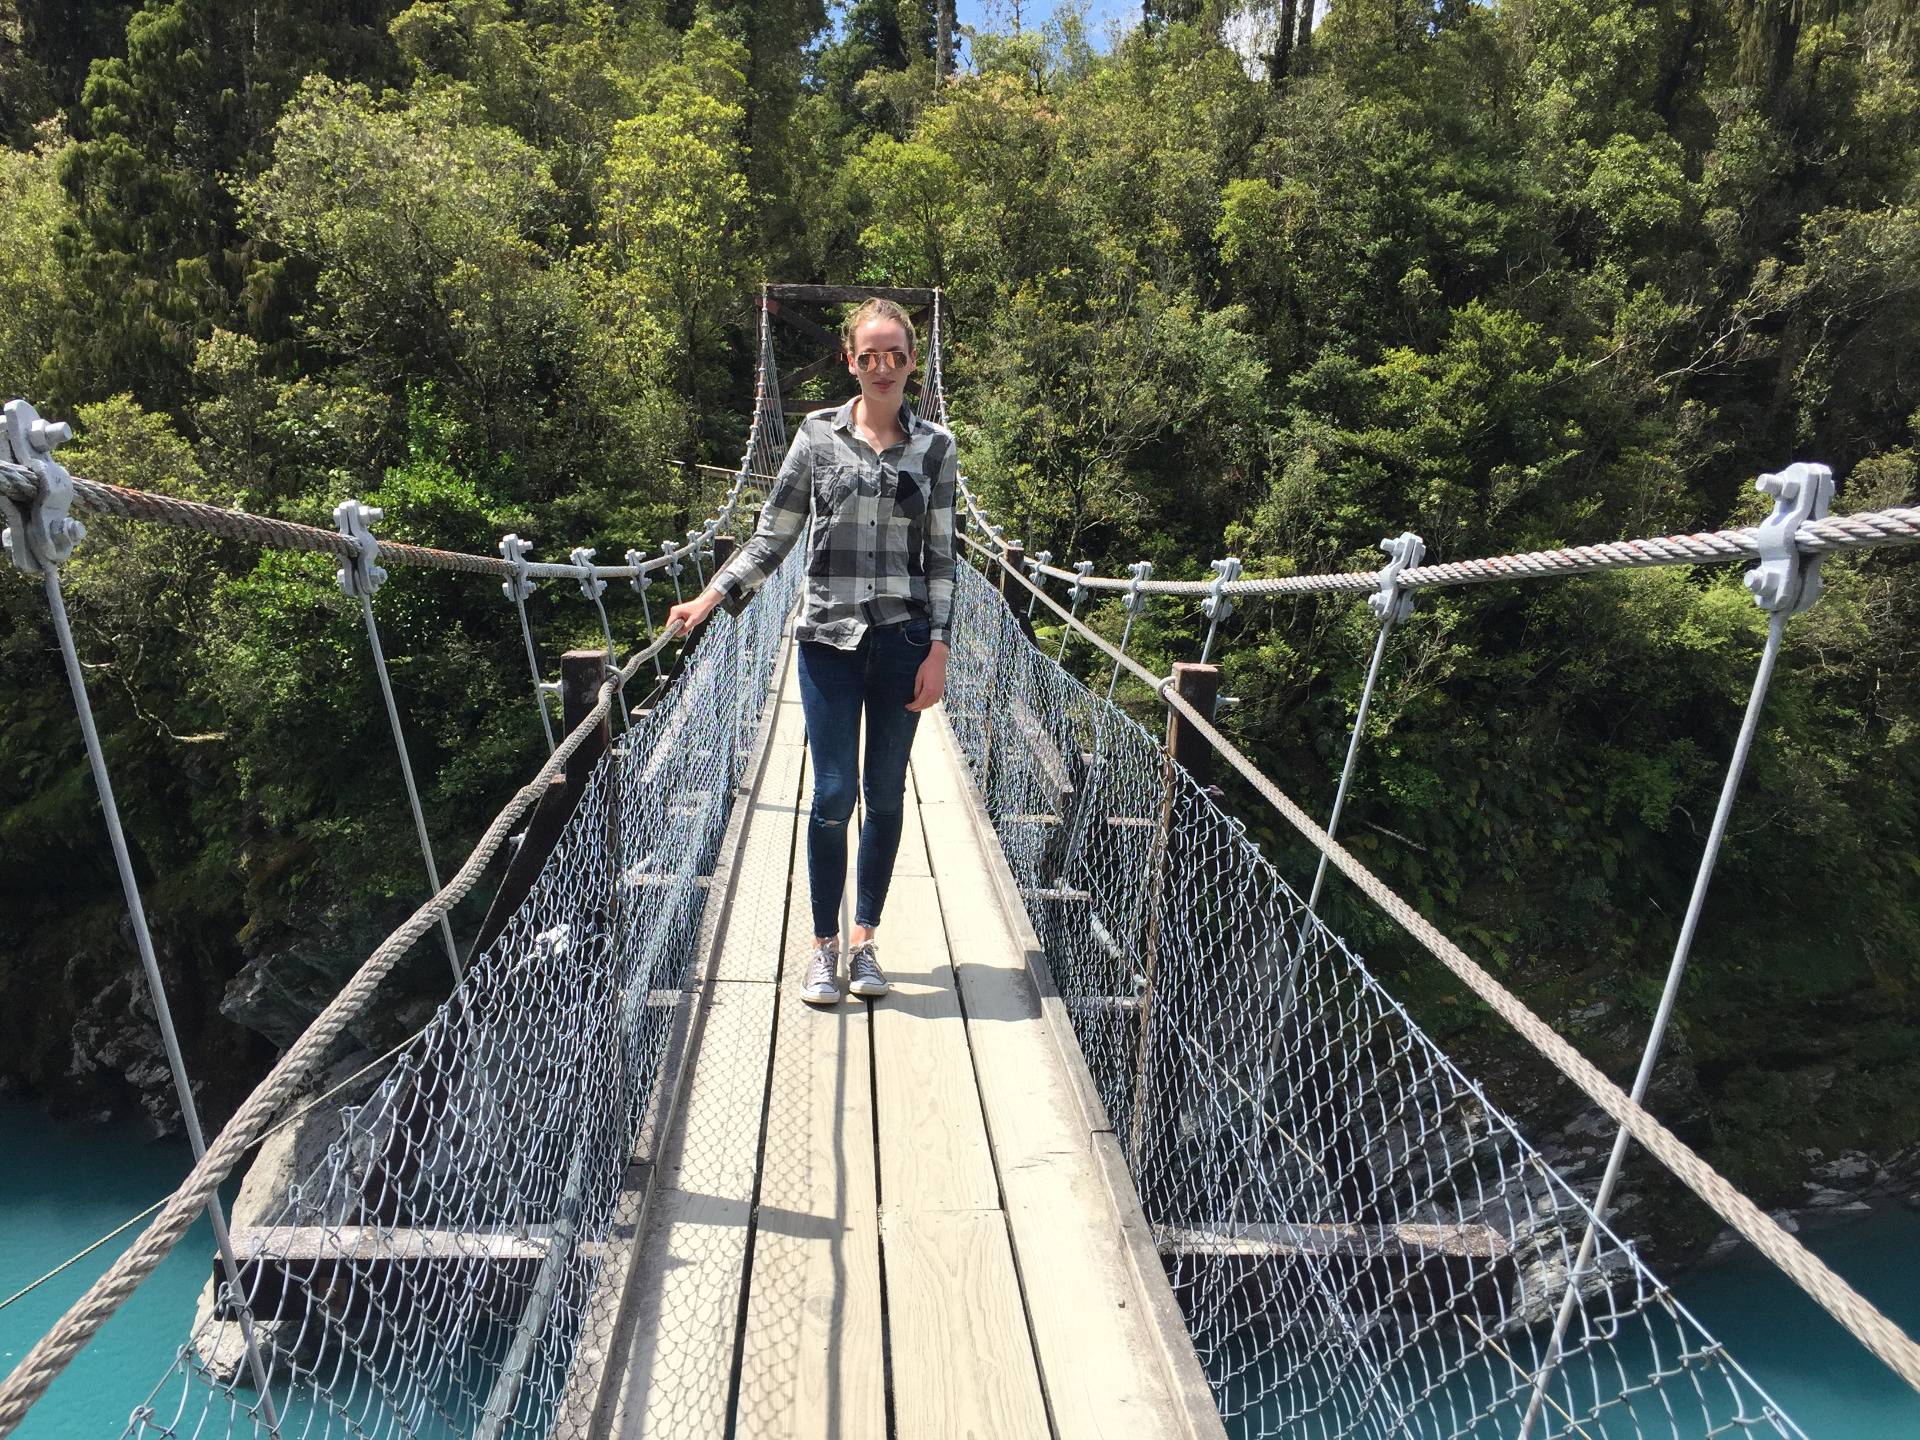 Me on the famous bridge of hokitika gorge